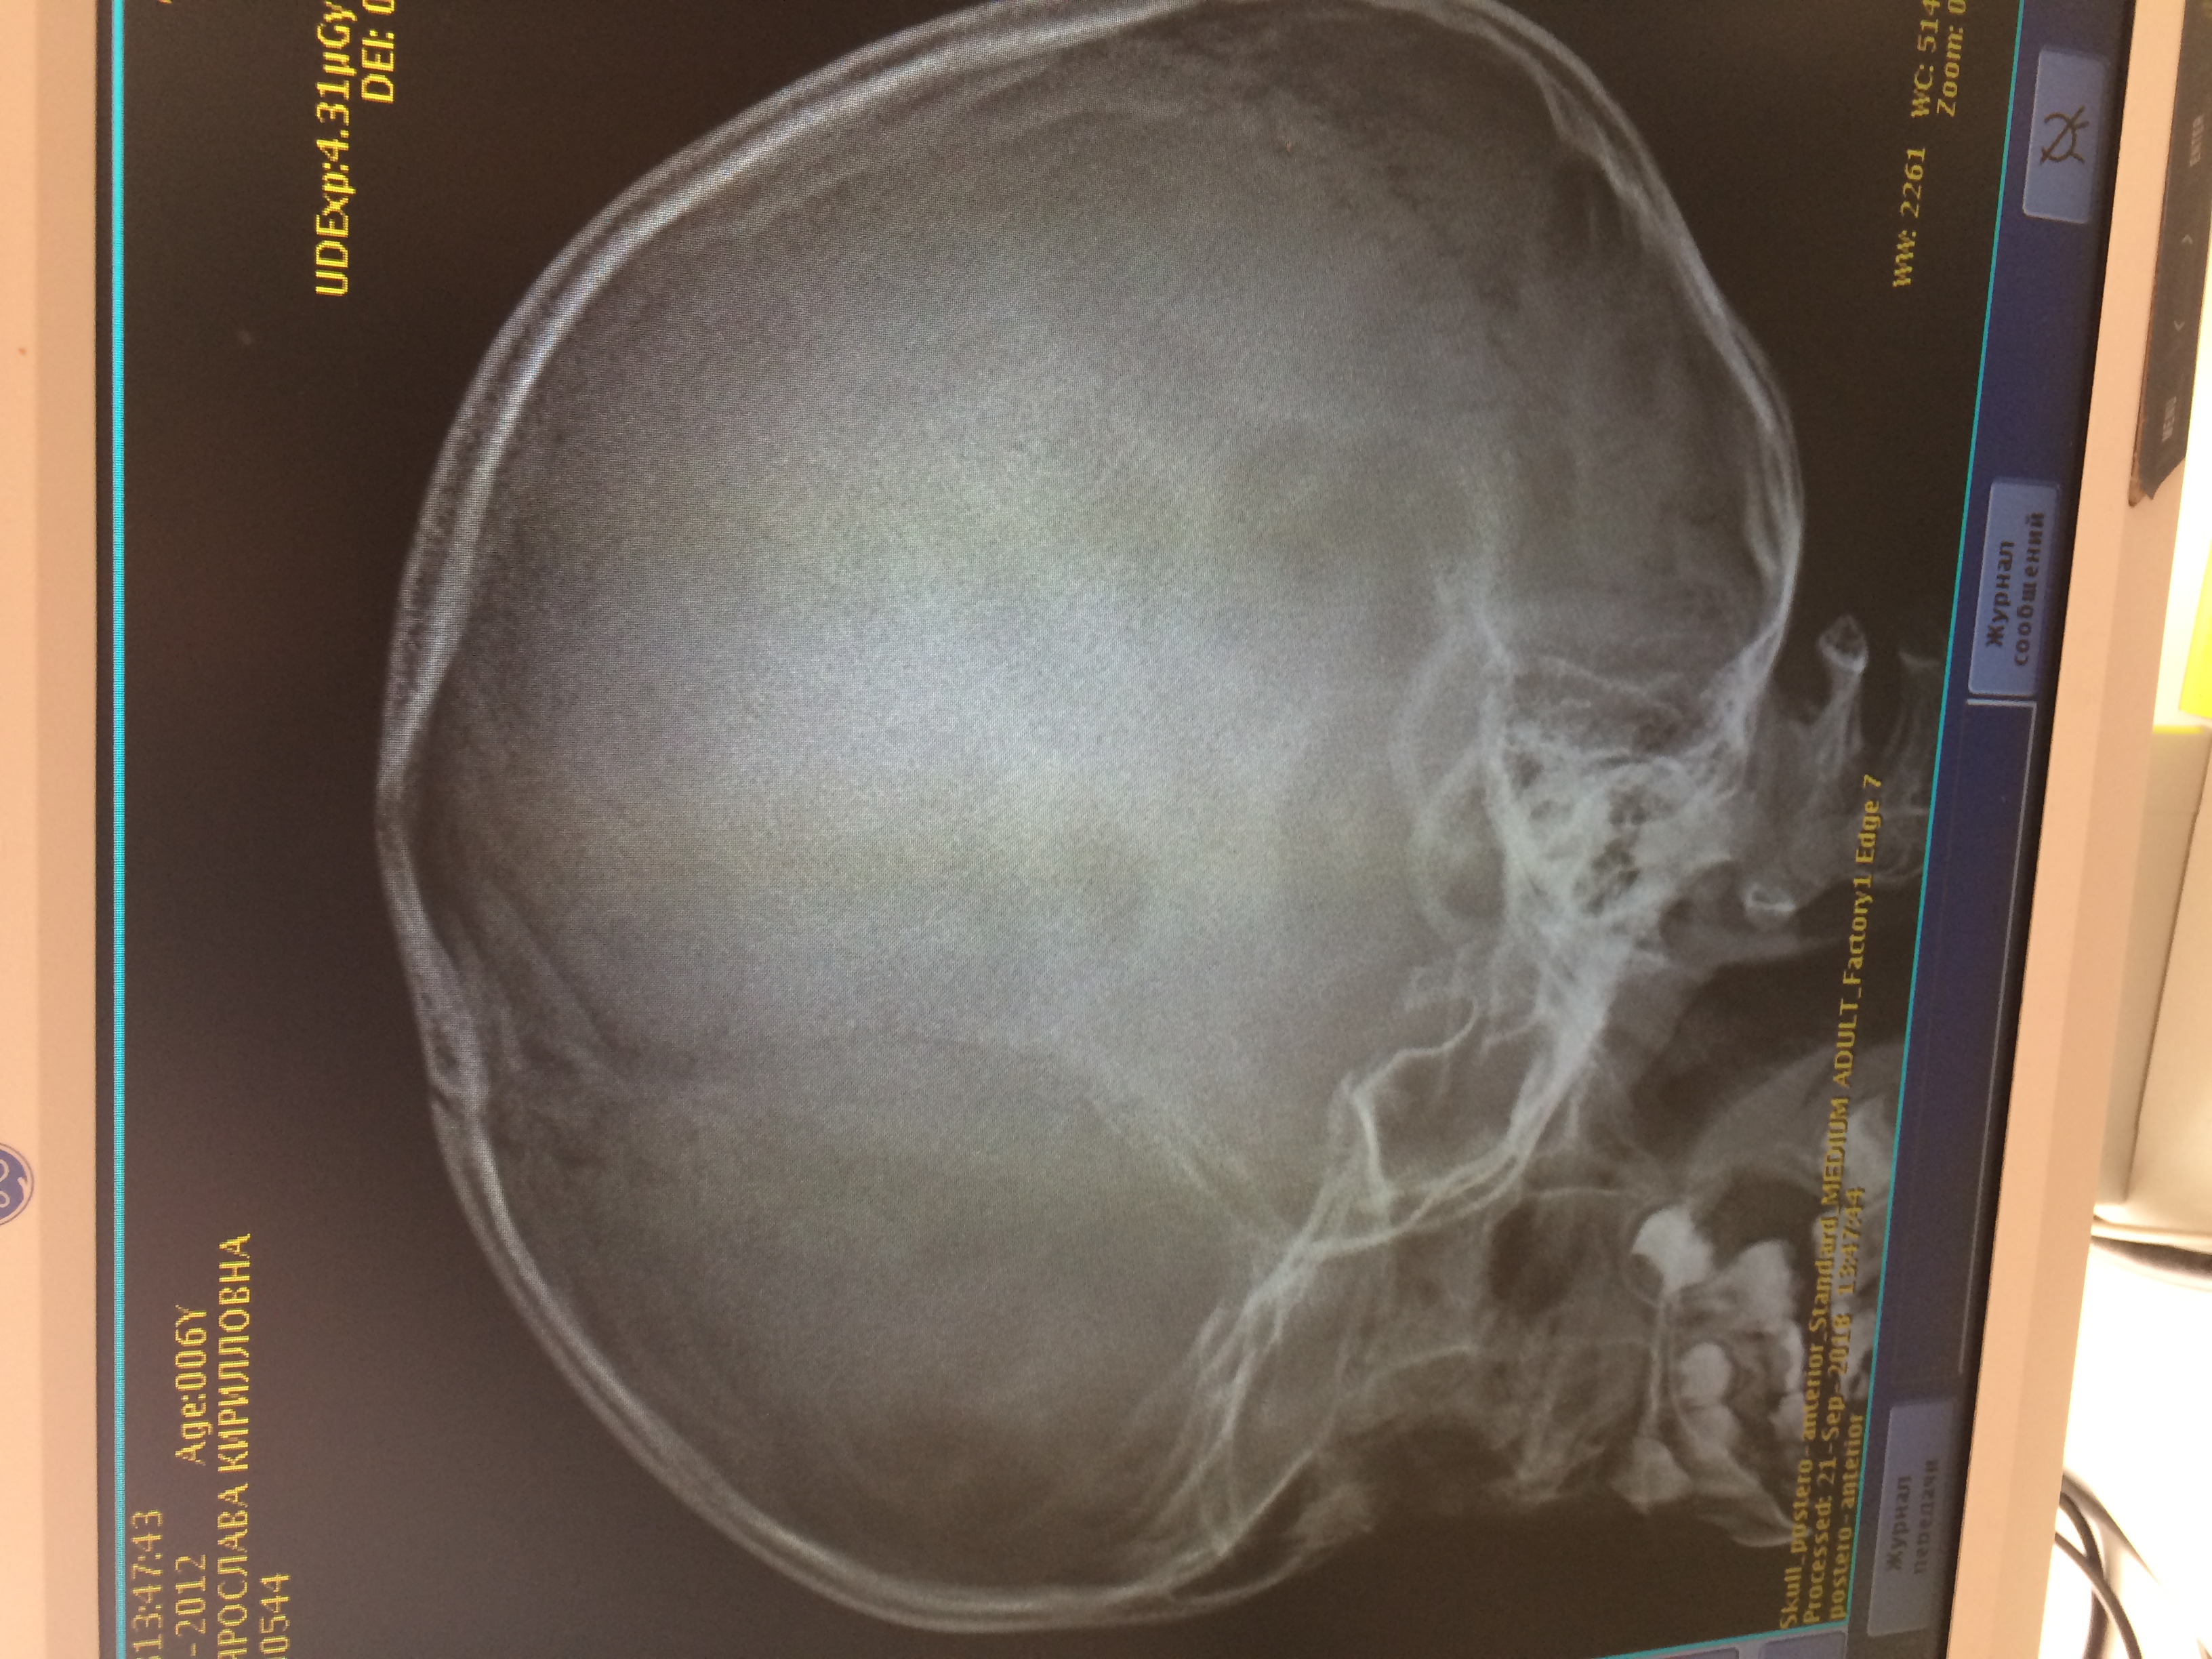 Детский череп рентген. Снимок черепа ребенка рентгеновский. Детский череп рентген снимок. Снимок рентгена черепа младенца.